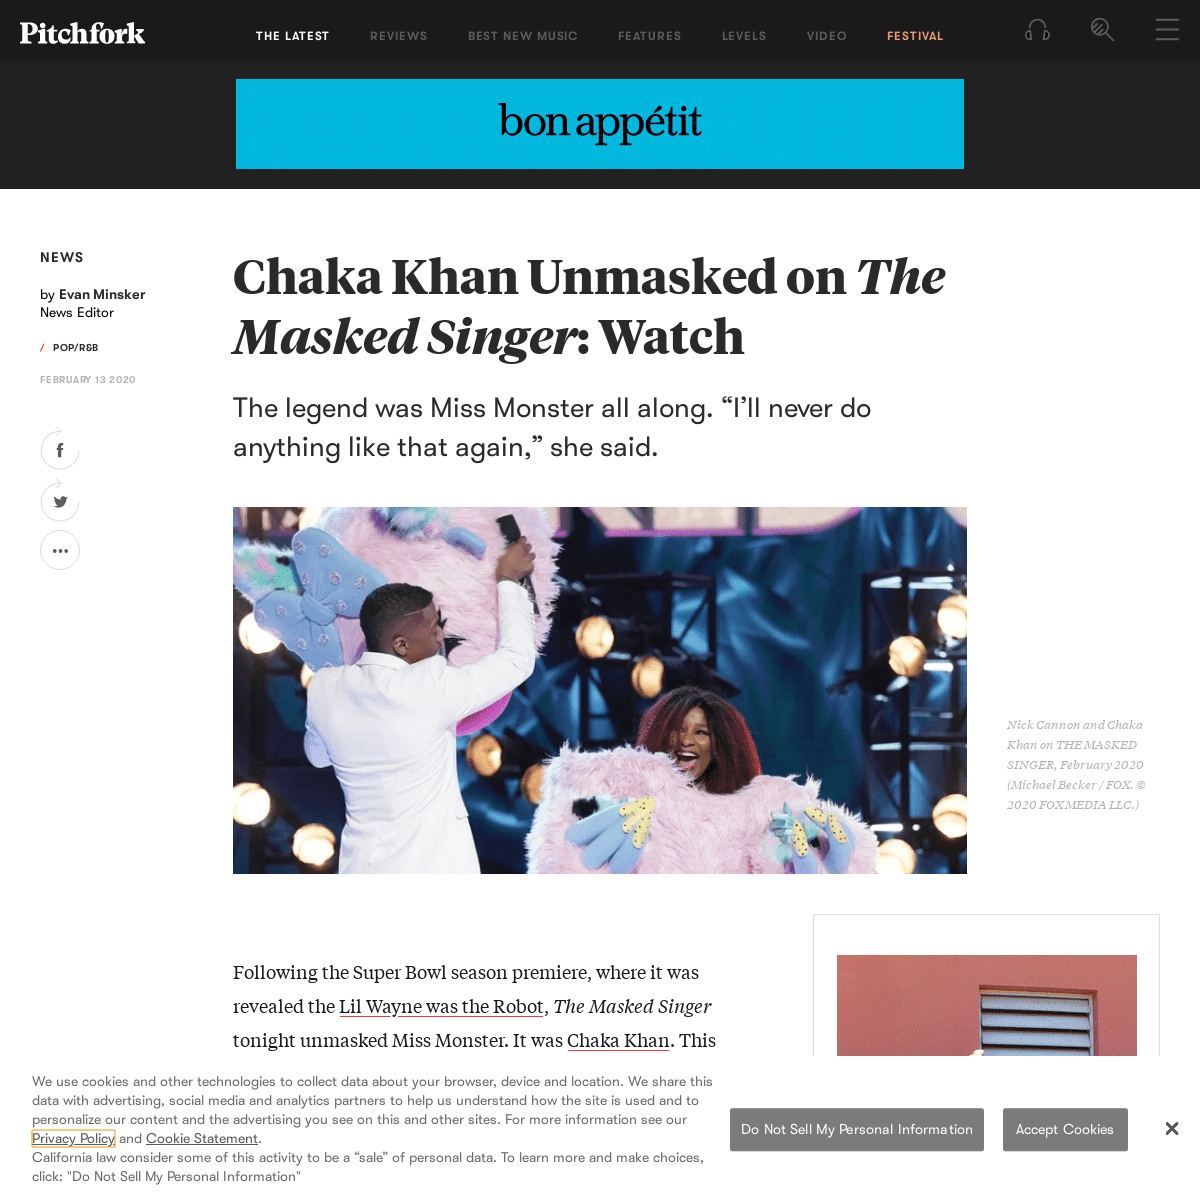 A complete backup of pitchfork.com/news/chaka-khan-unmasked-on-the-masked-singer-watch/